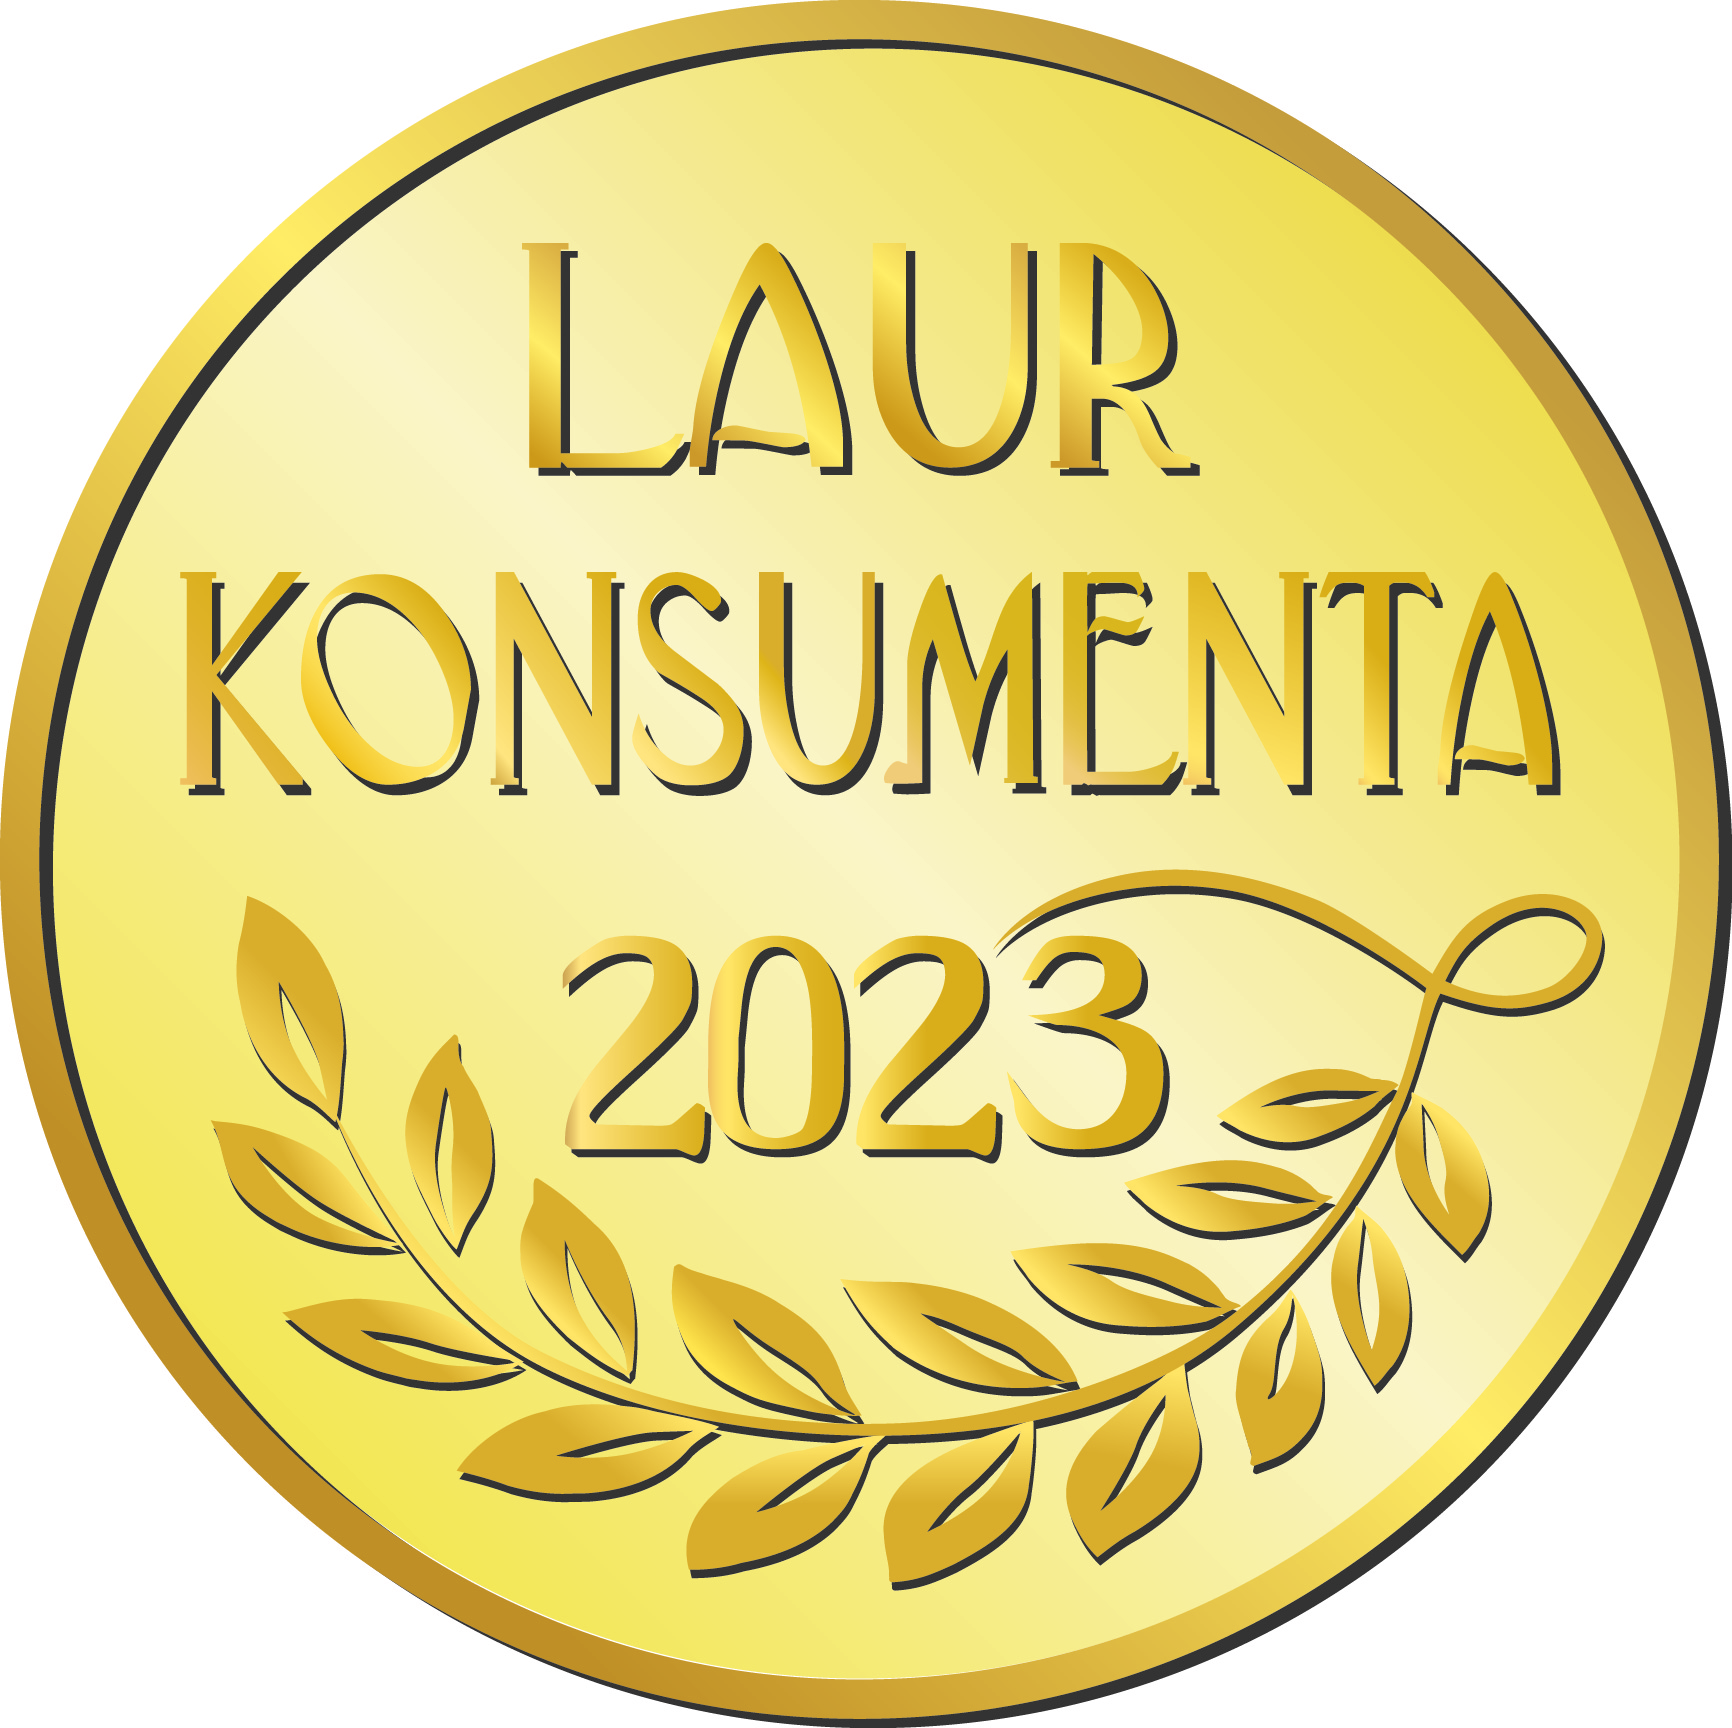 LaurKonsumentazloty 092023